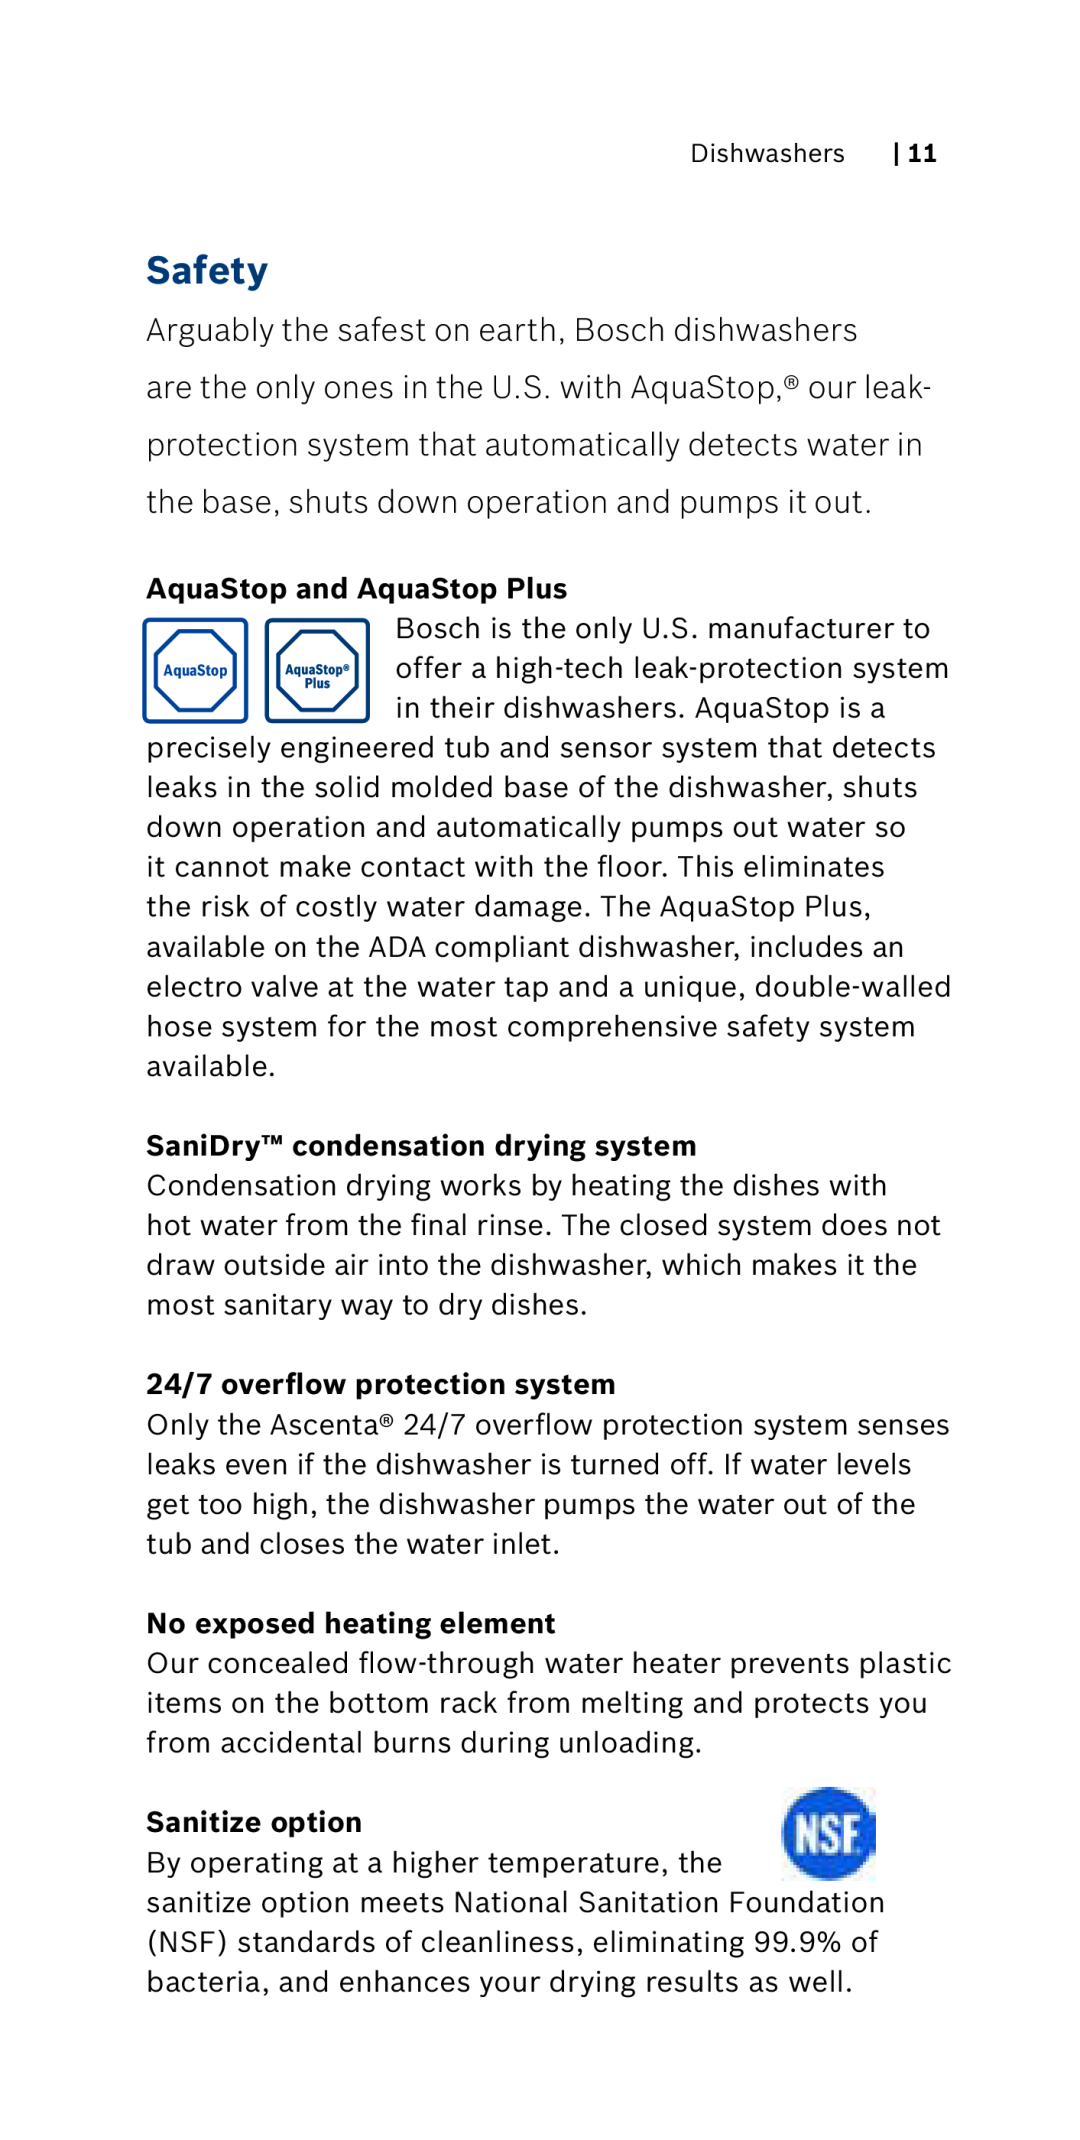 Bosch Appliances 800 Series manual Safety, AquaStop and AquaStop Plus, 24/7 overflow protection system, Sanitize option 